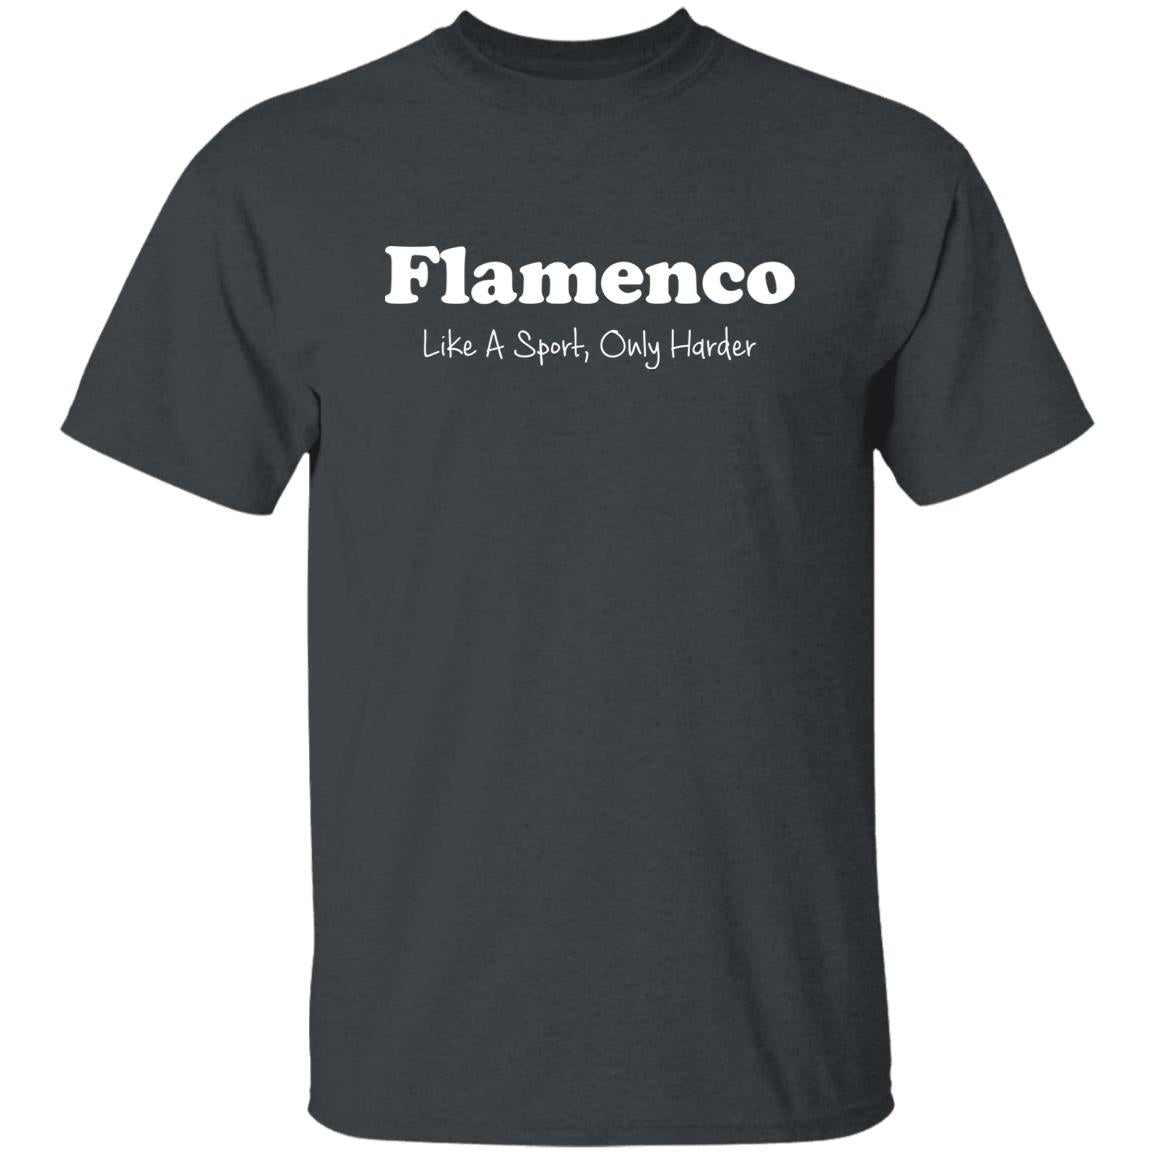 Flamenco like a sport only harder Unisex Shirt S-2XL Dark Heather-Dark Heather-Family-Gift-Planet